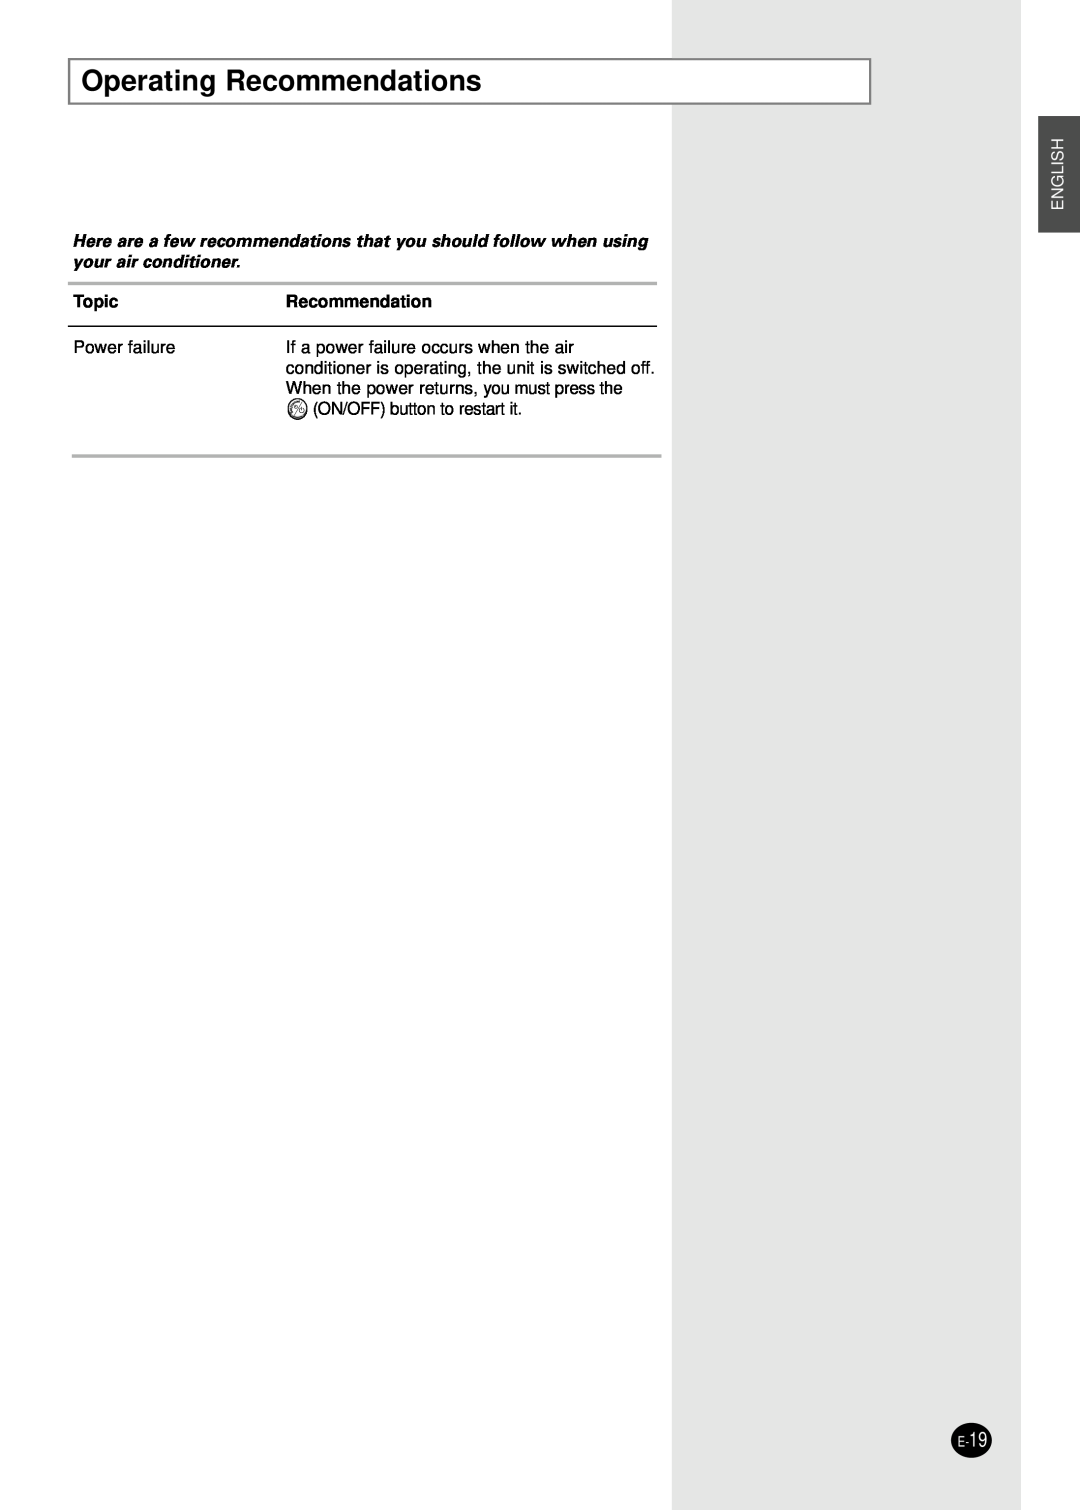 Samsung AM27B1(B2)C13 installation manual Operating Recommendations, English, TopicRecommendation, E-19 